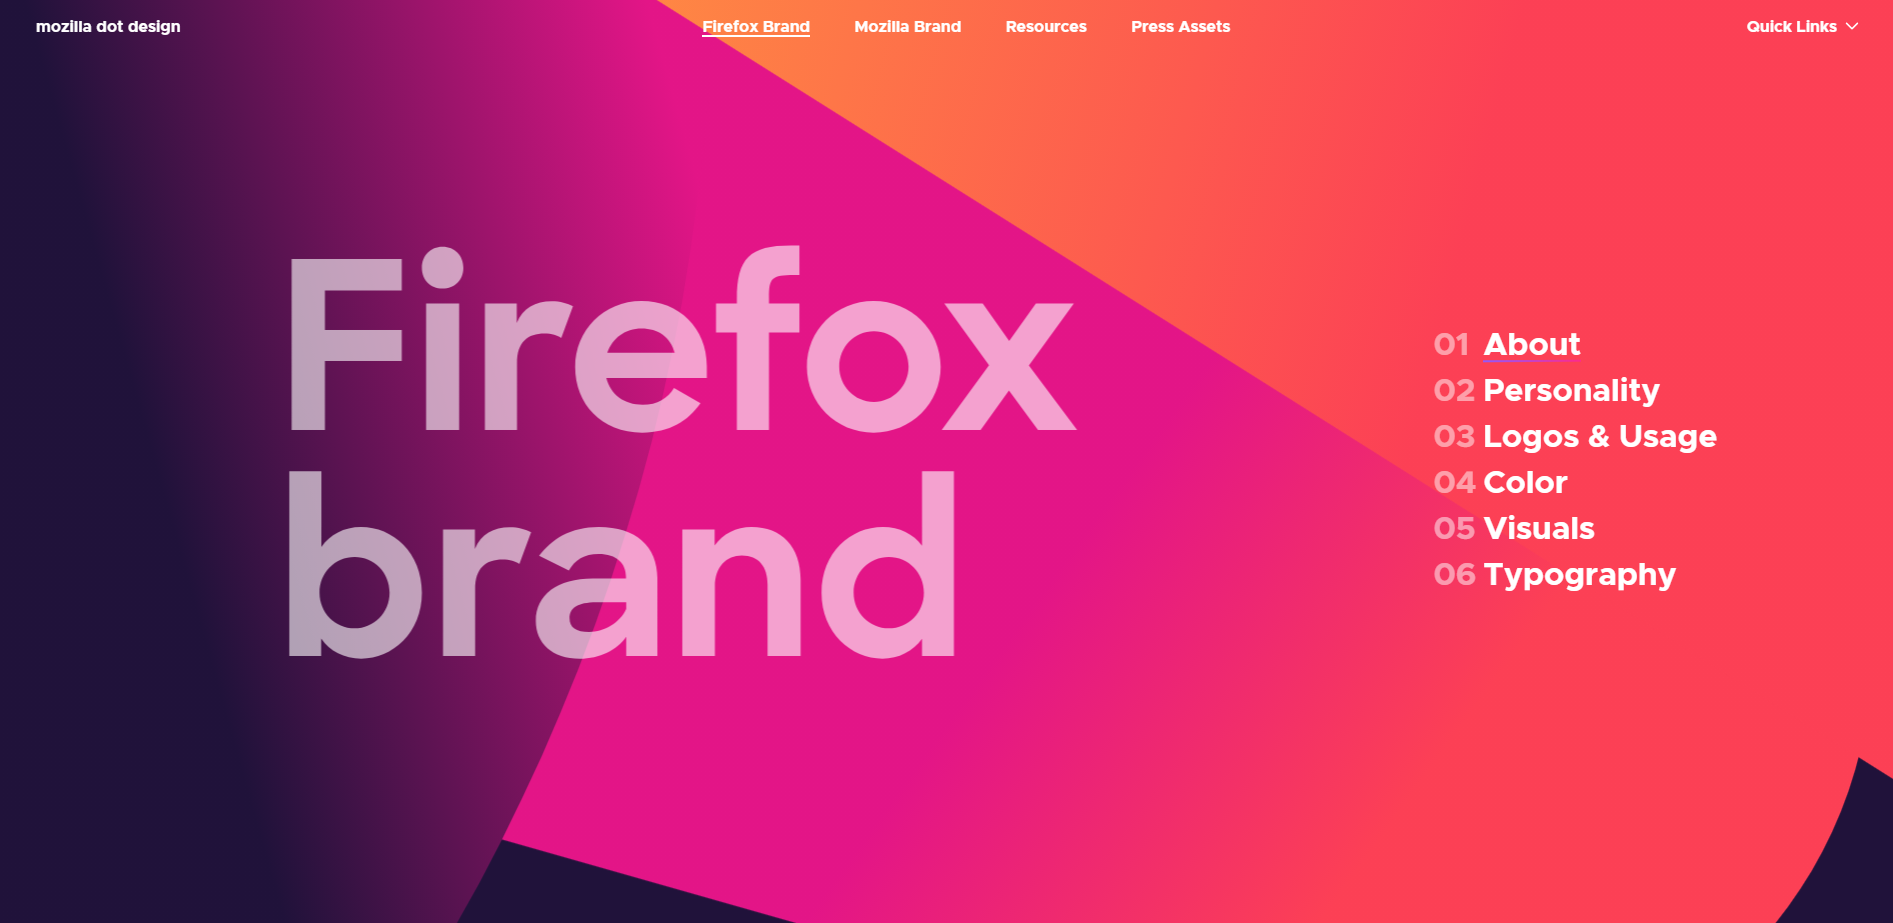 Firefox's Brand Guide